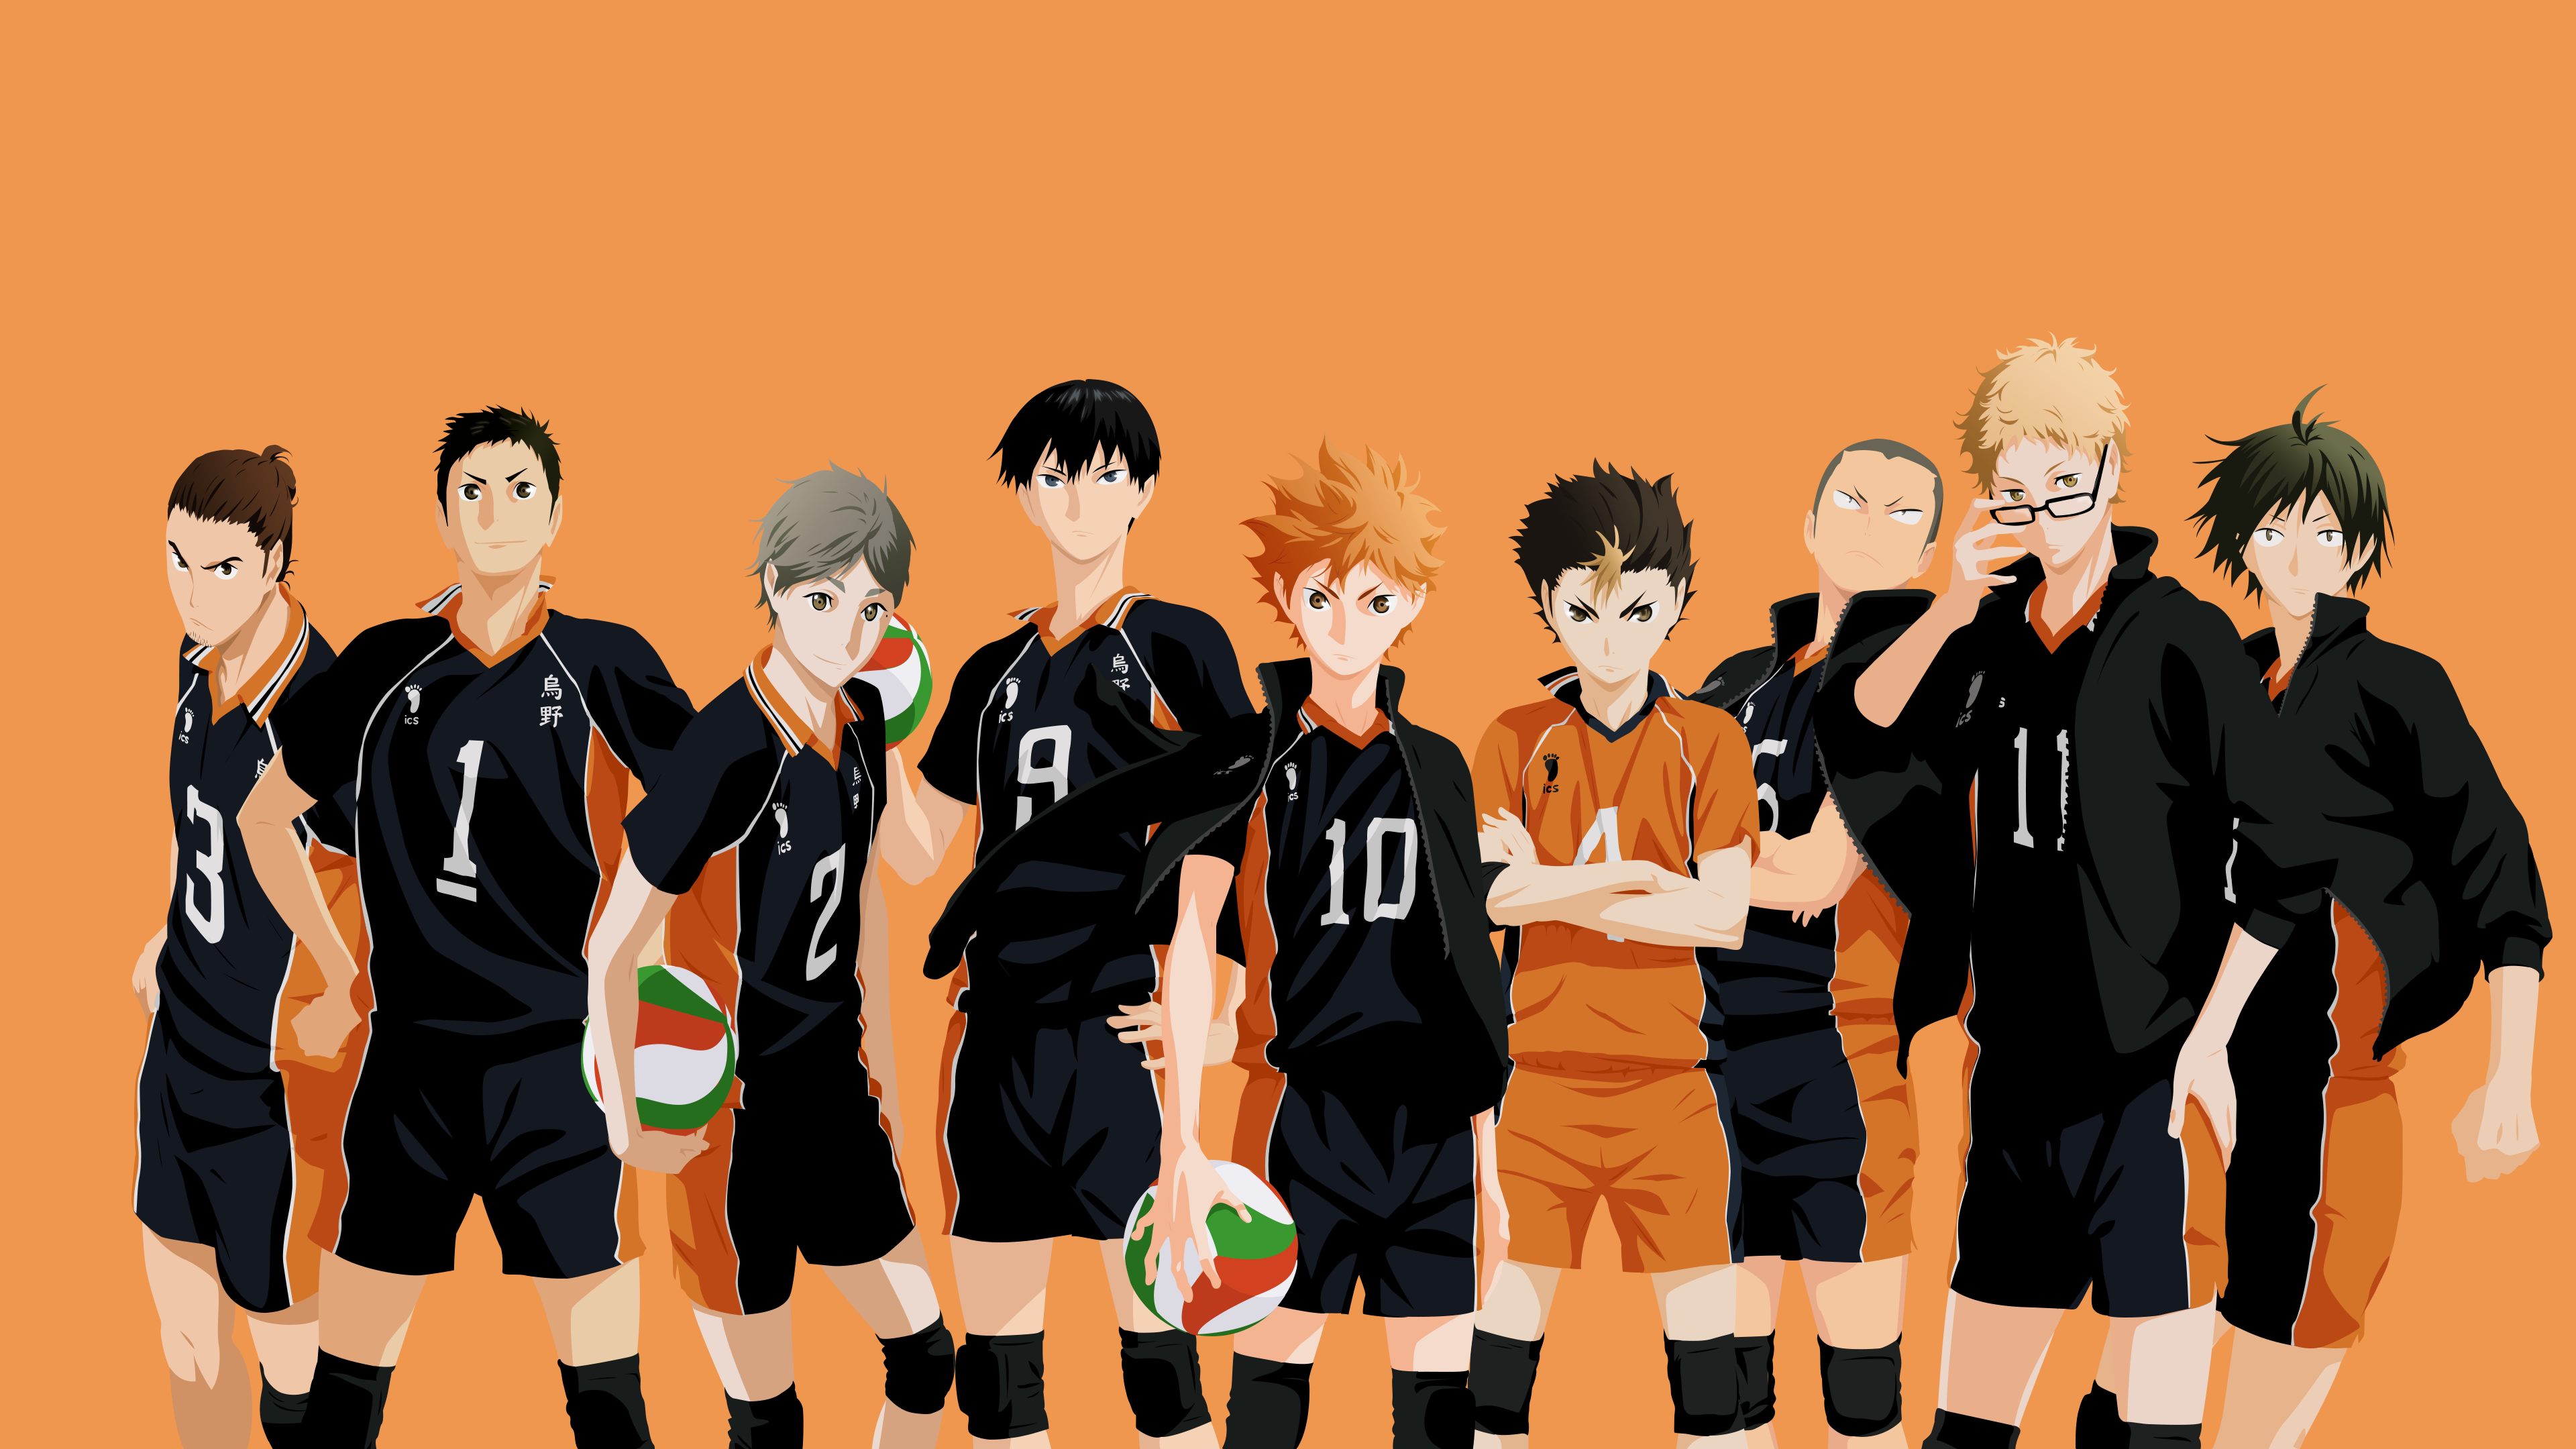 Karasuno Volleyball Team Desktop Wallpaper. Haikyuu wallpaper, HD anime wallpaper, Anime wallpaper 1920x1080